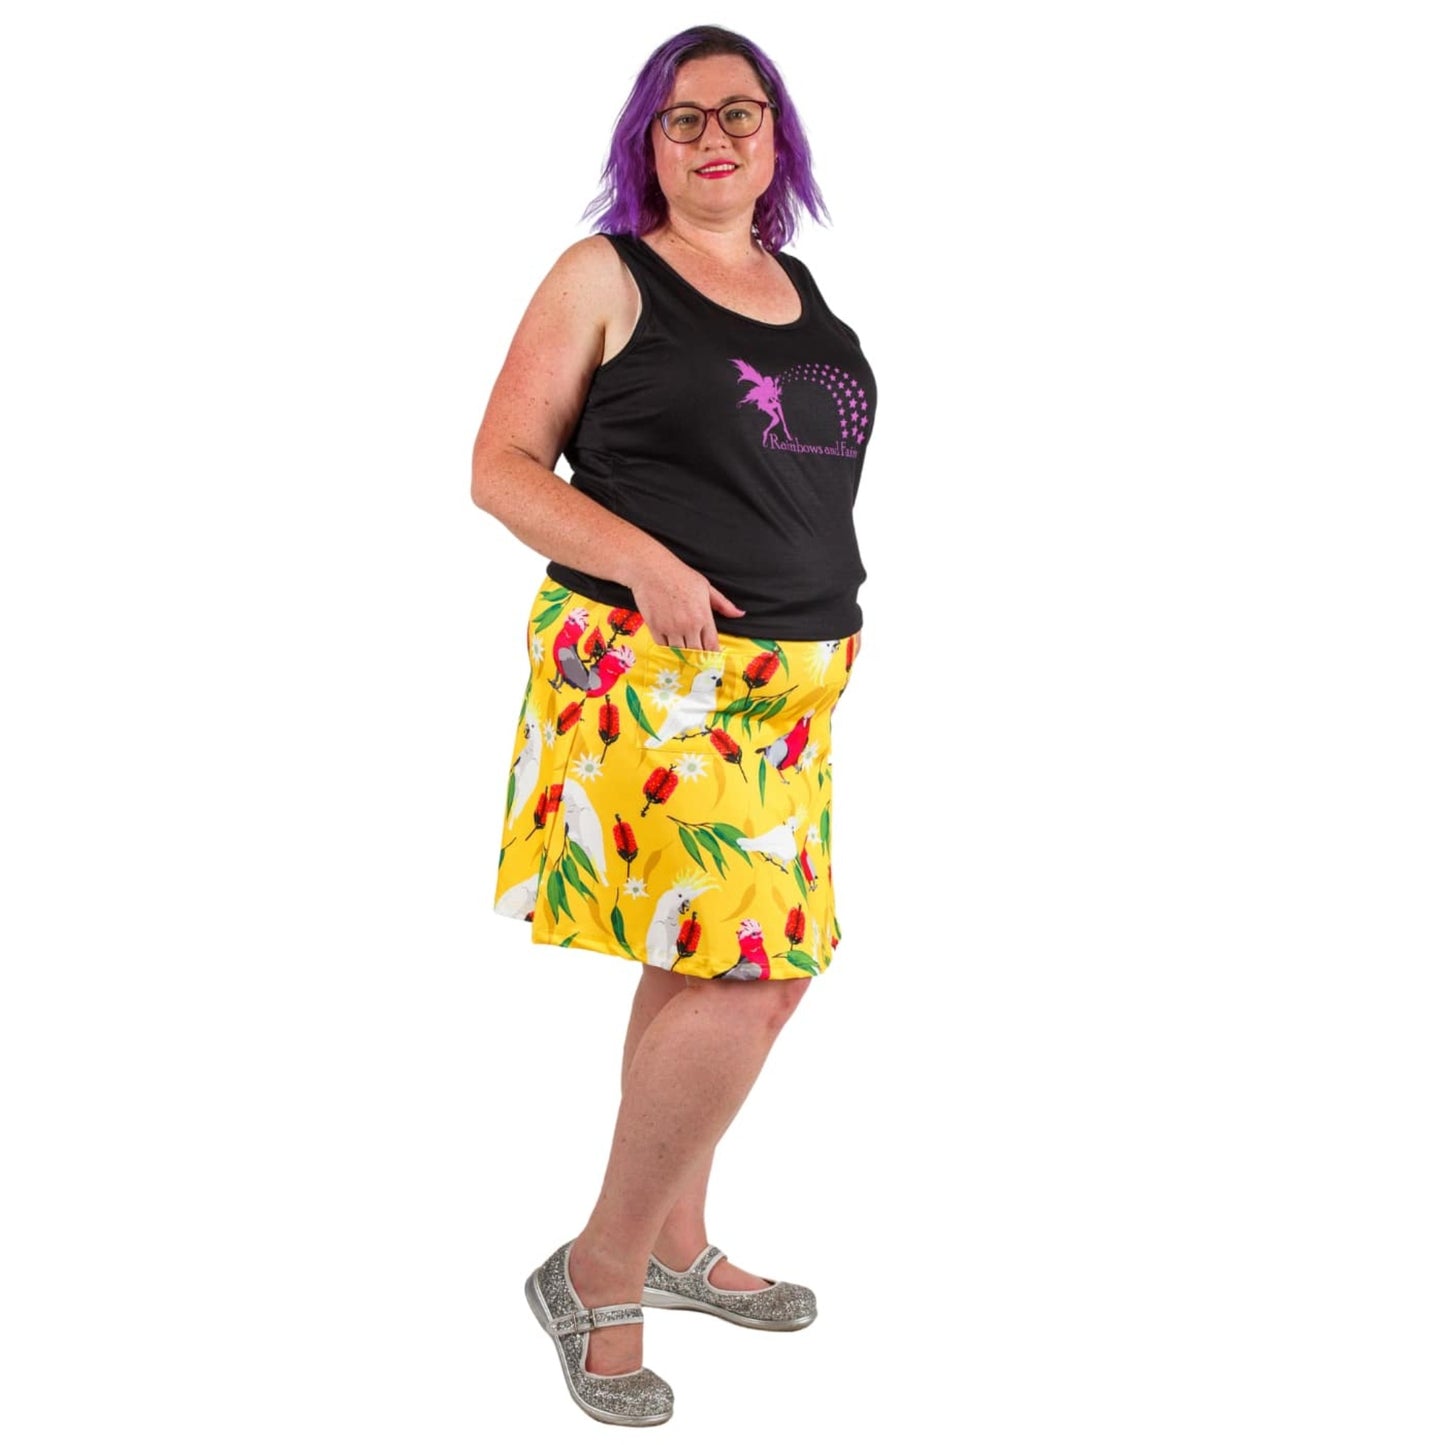 Polly Short Skirt by RainbowsAndFairies.com.au (Cockatoo - Galah - Australian Birds - Aline Skirt - Vintage Inspired - Skirt With Pockets - Kitsch) - SKU: CL_SHORT_POLLY_ORG - Pic-05